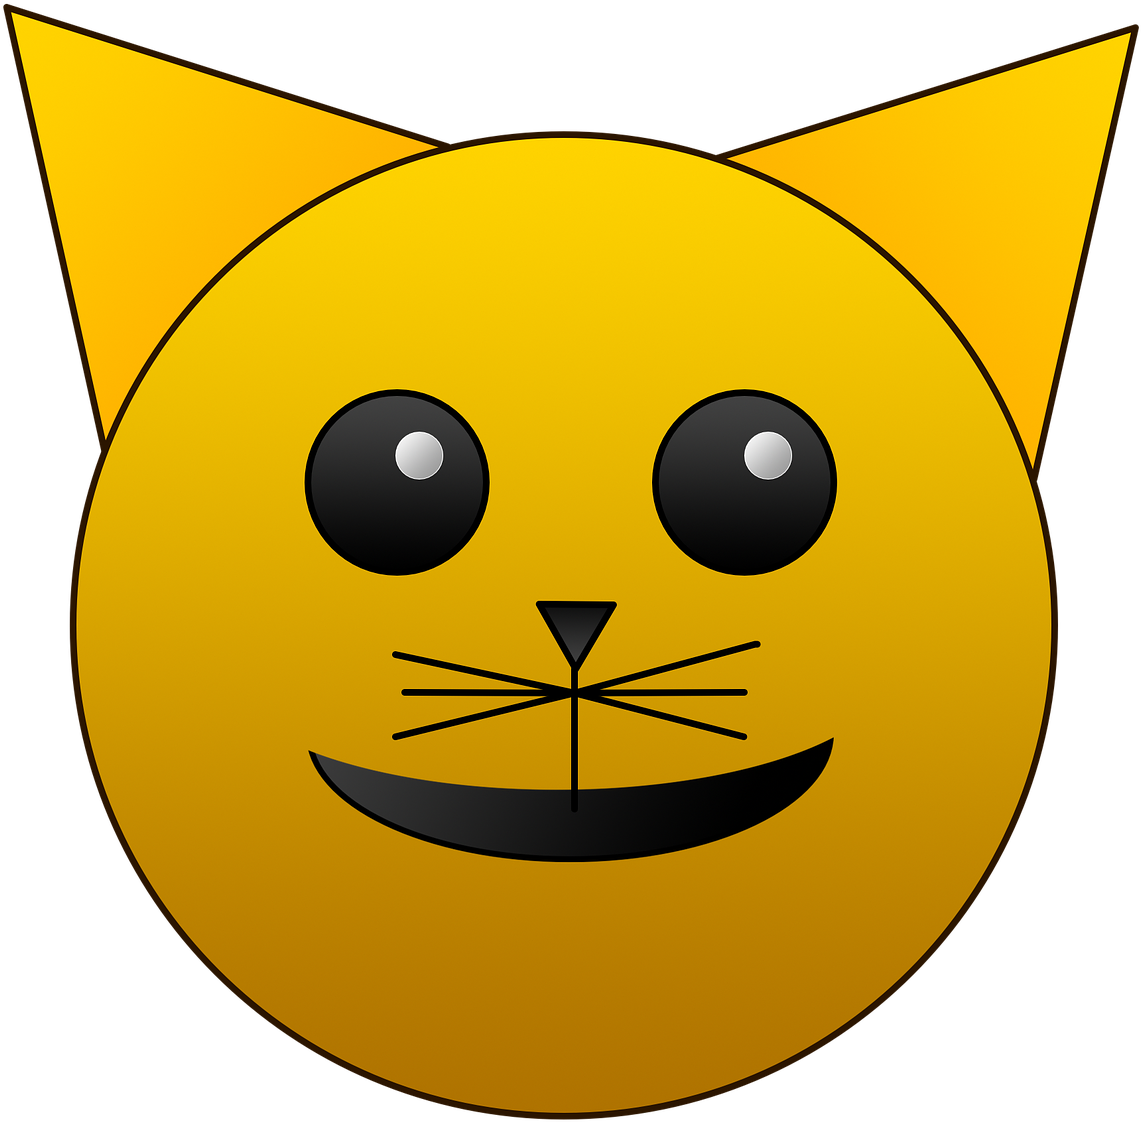 Smiling Cat Emoji Graphic PNG image